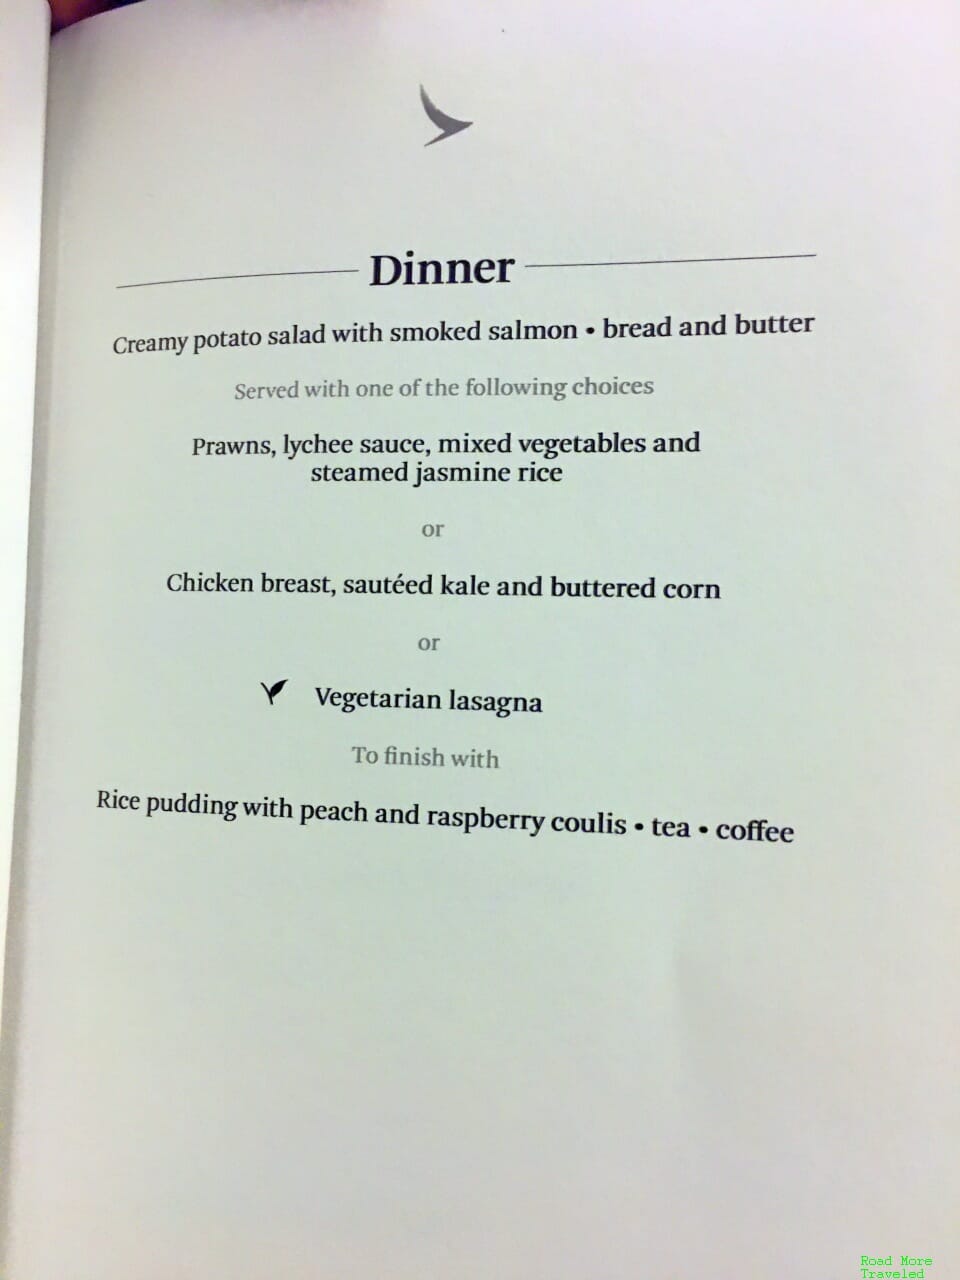 Cathay Pacific Premium Economy dinner menu